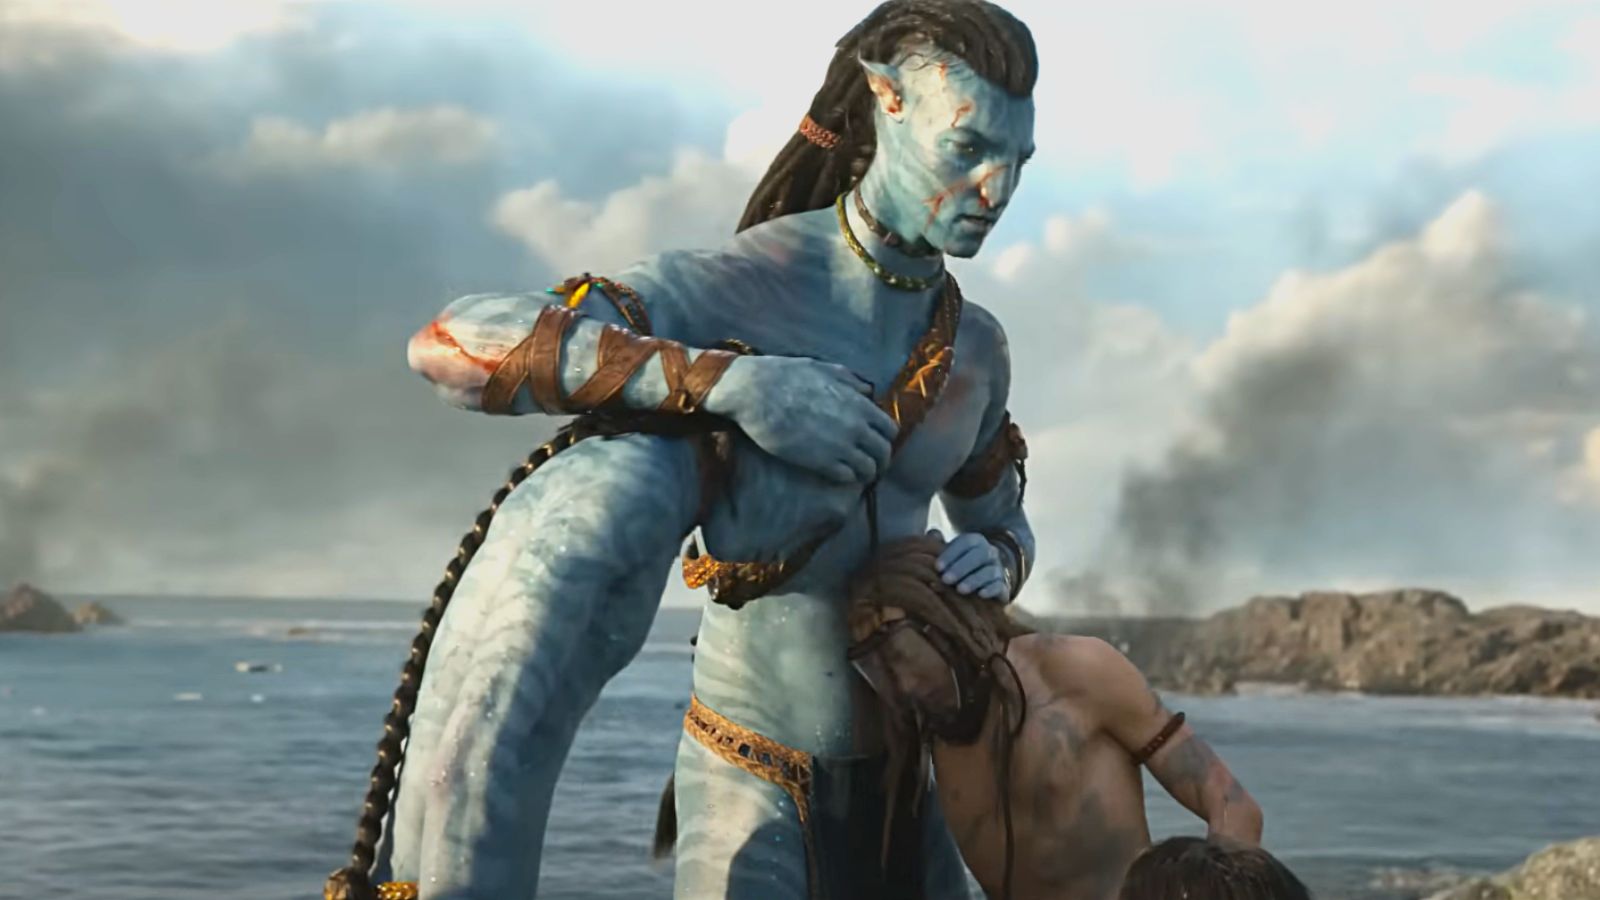 Avatar Navi Body Paint Cosplay Looks As Good As The Movies CGI